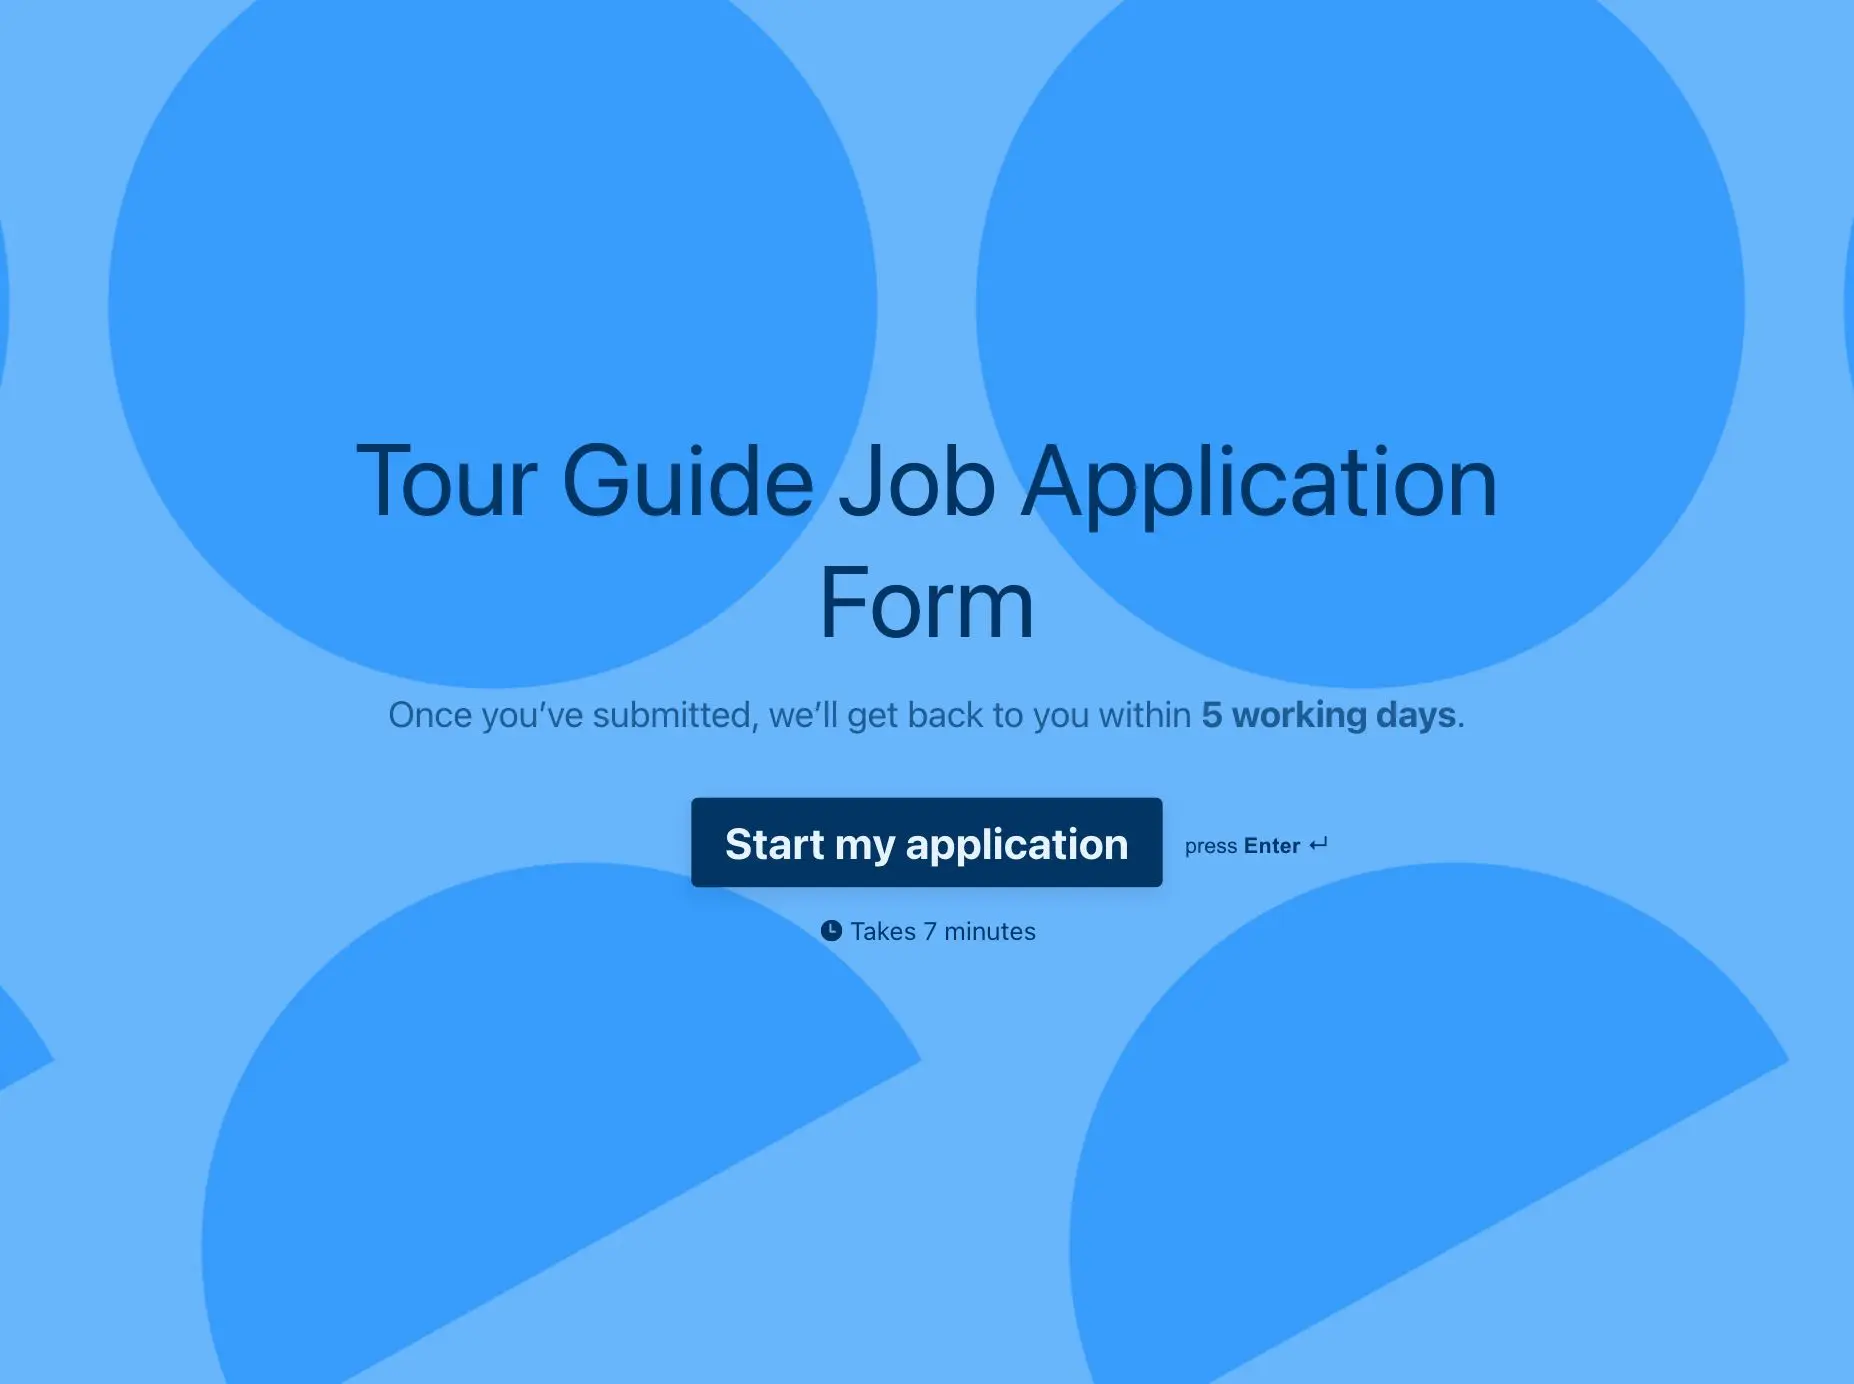 Tour Guide Job Application Form Template Hero